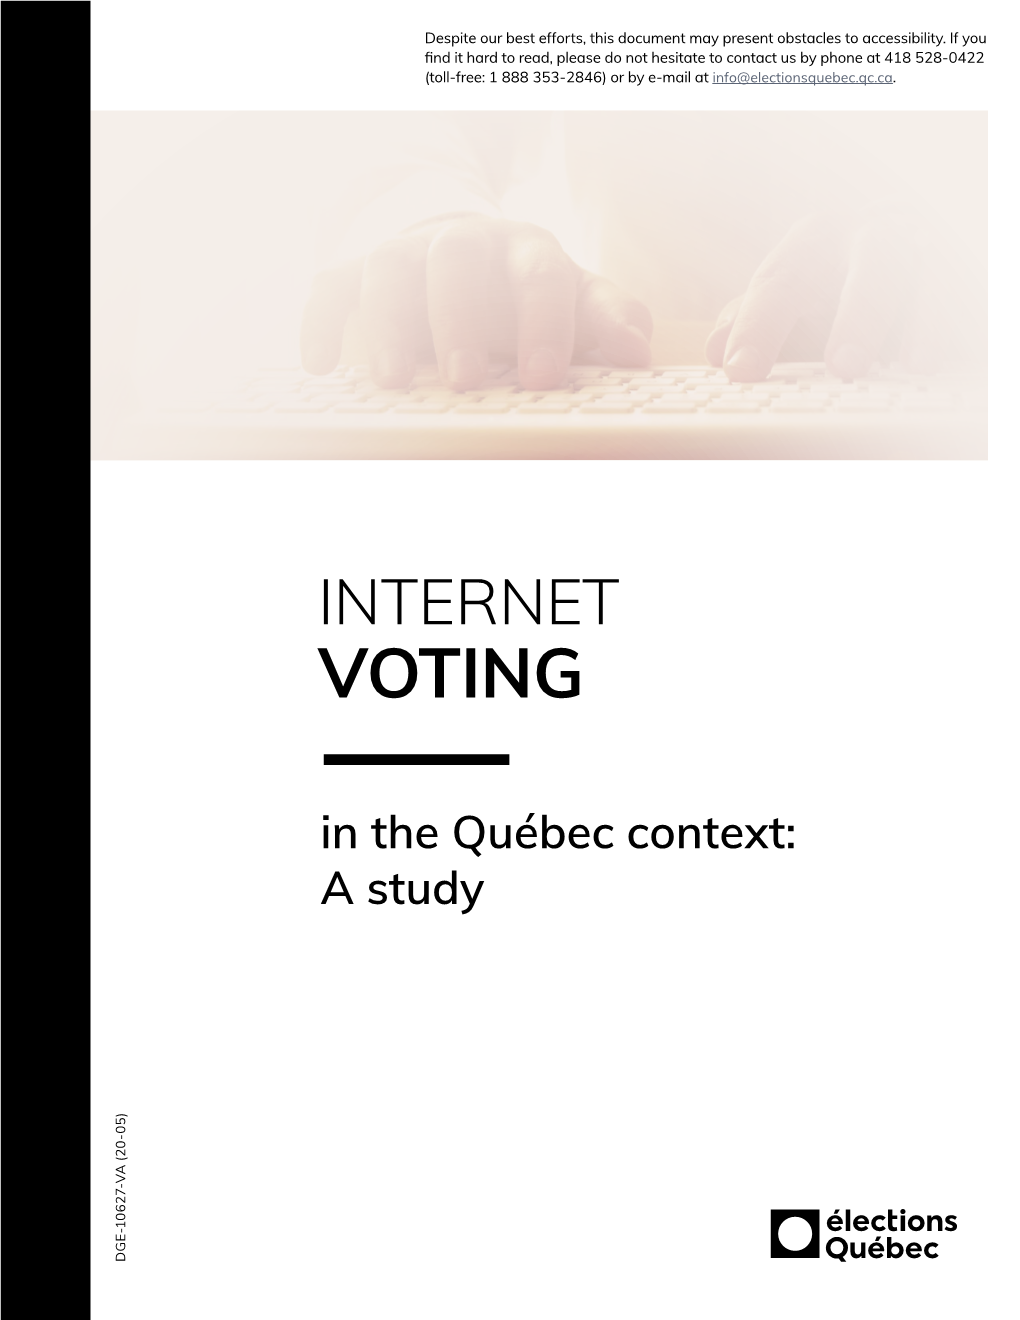 Internet Voting in the Québec Context